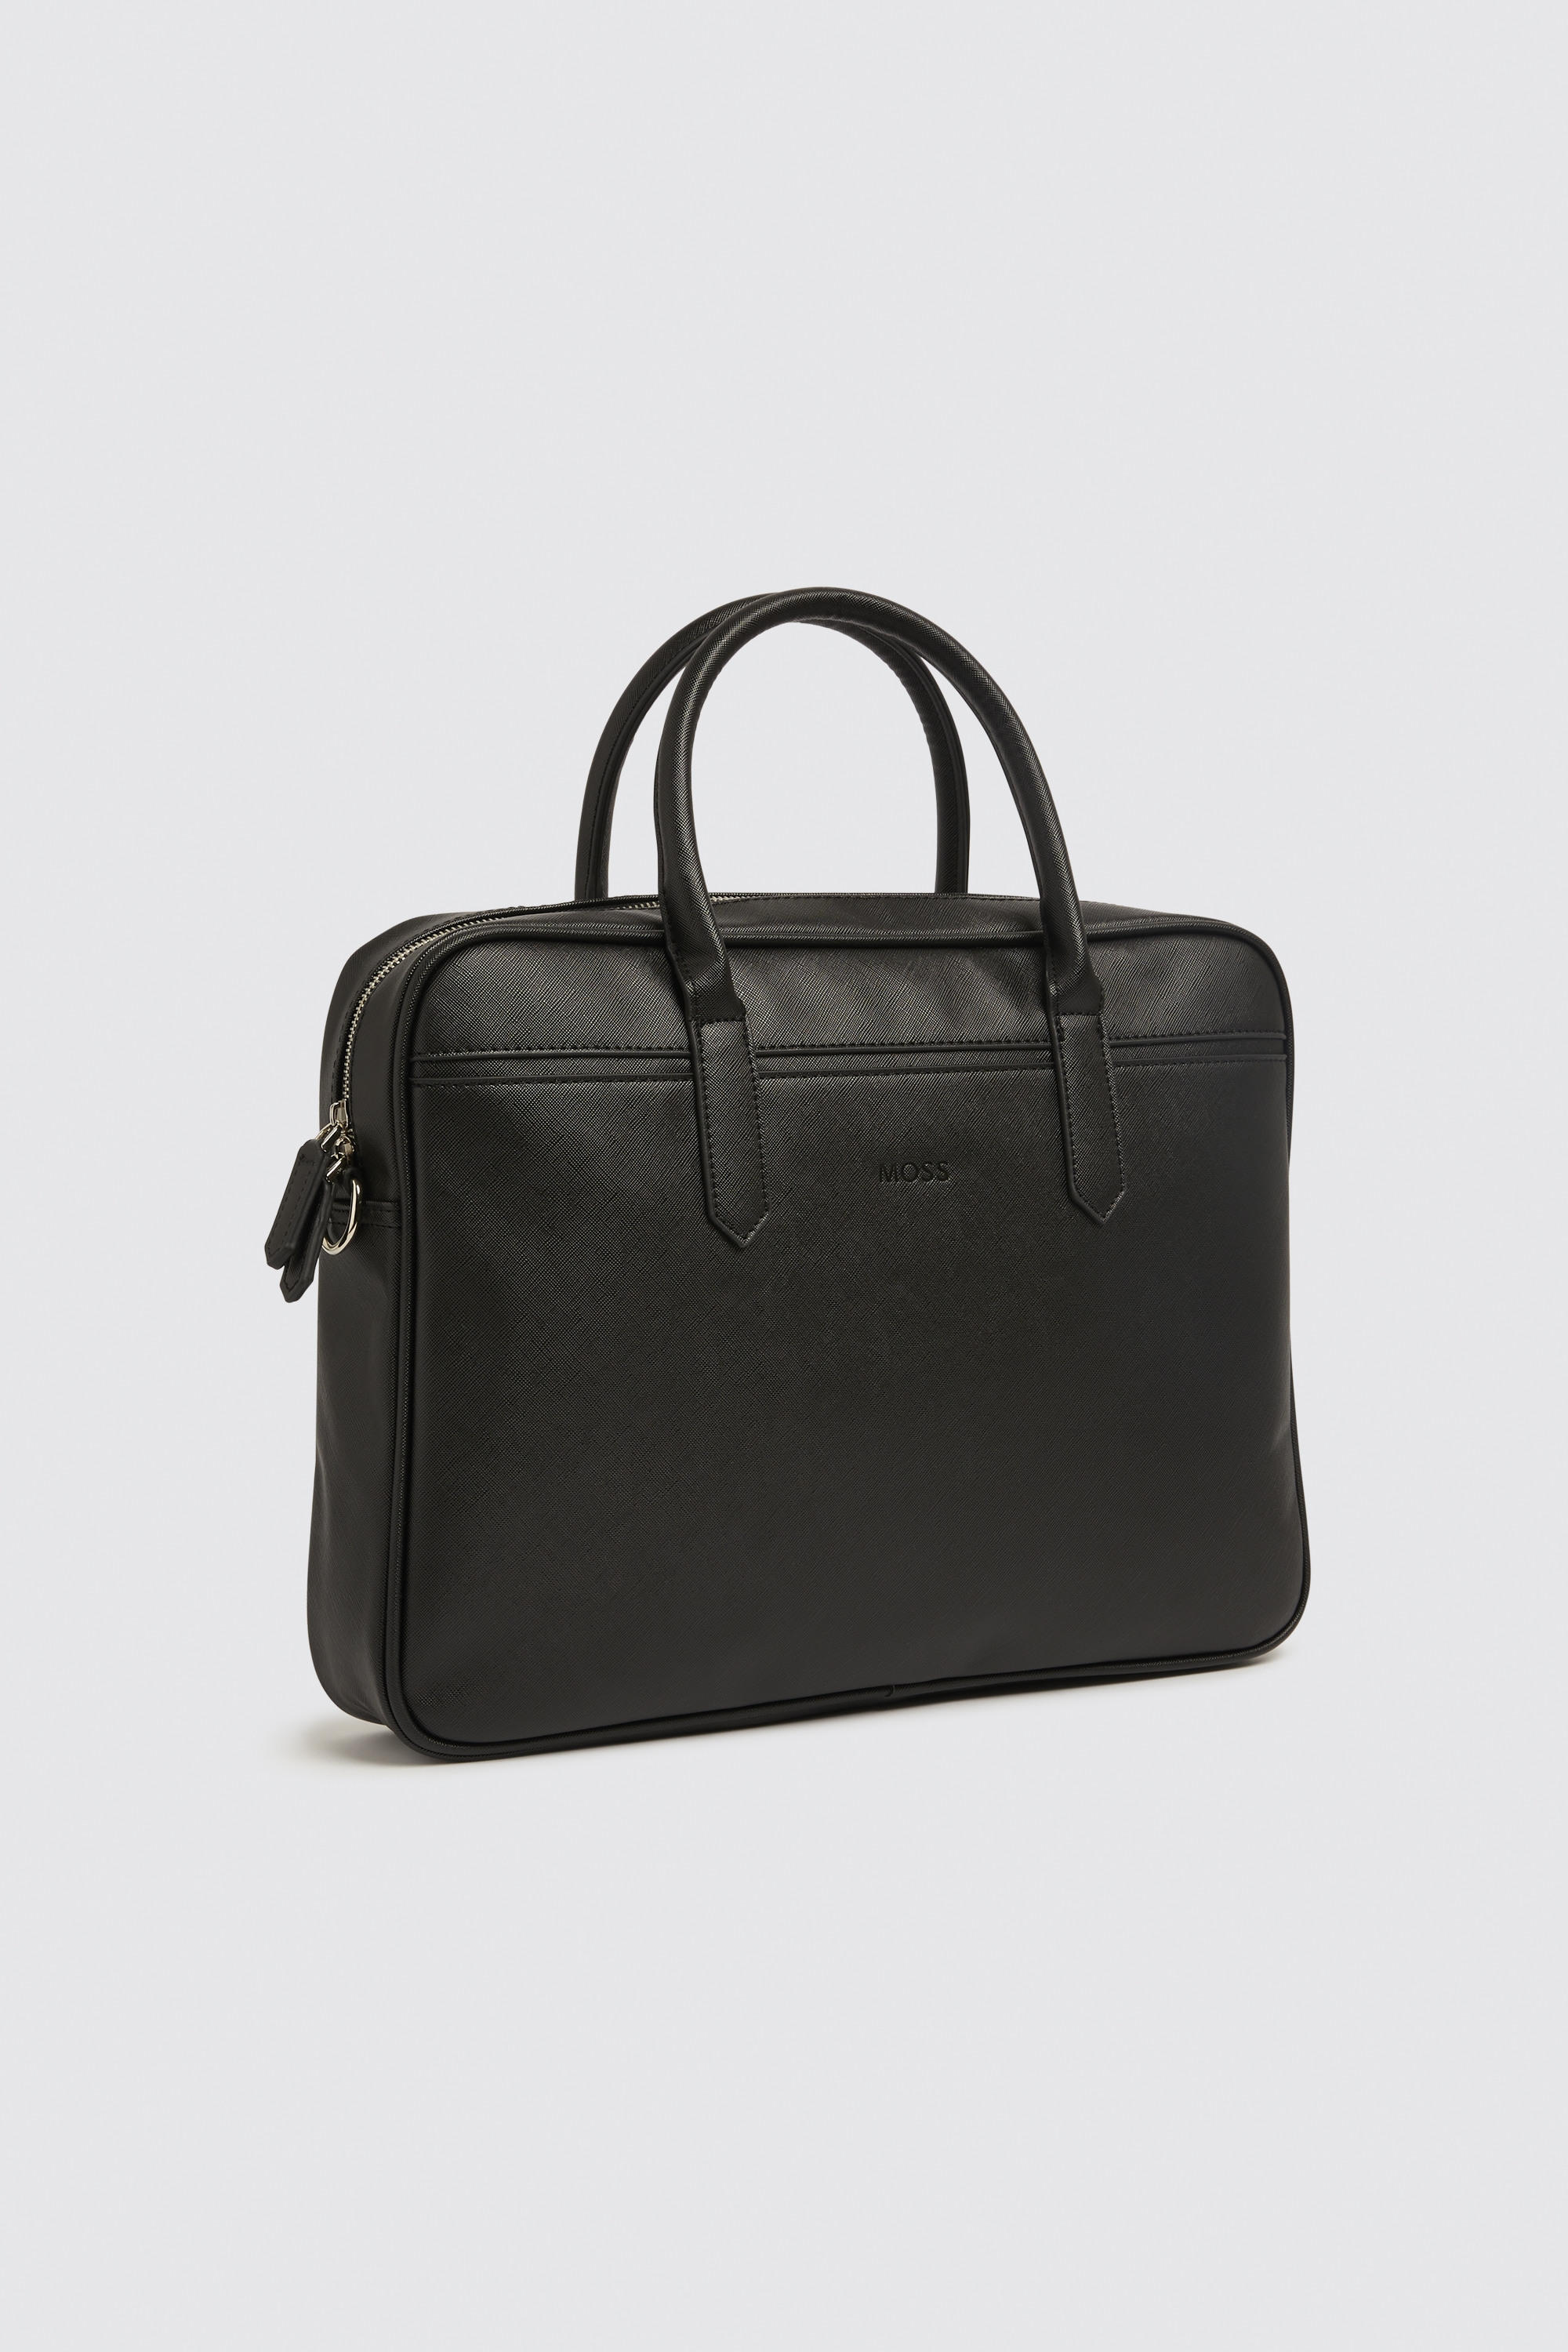 Moss Black Saffiano Attache Bag | Buy Online at Moss